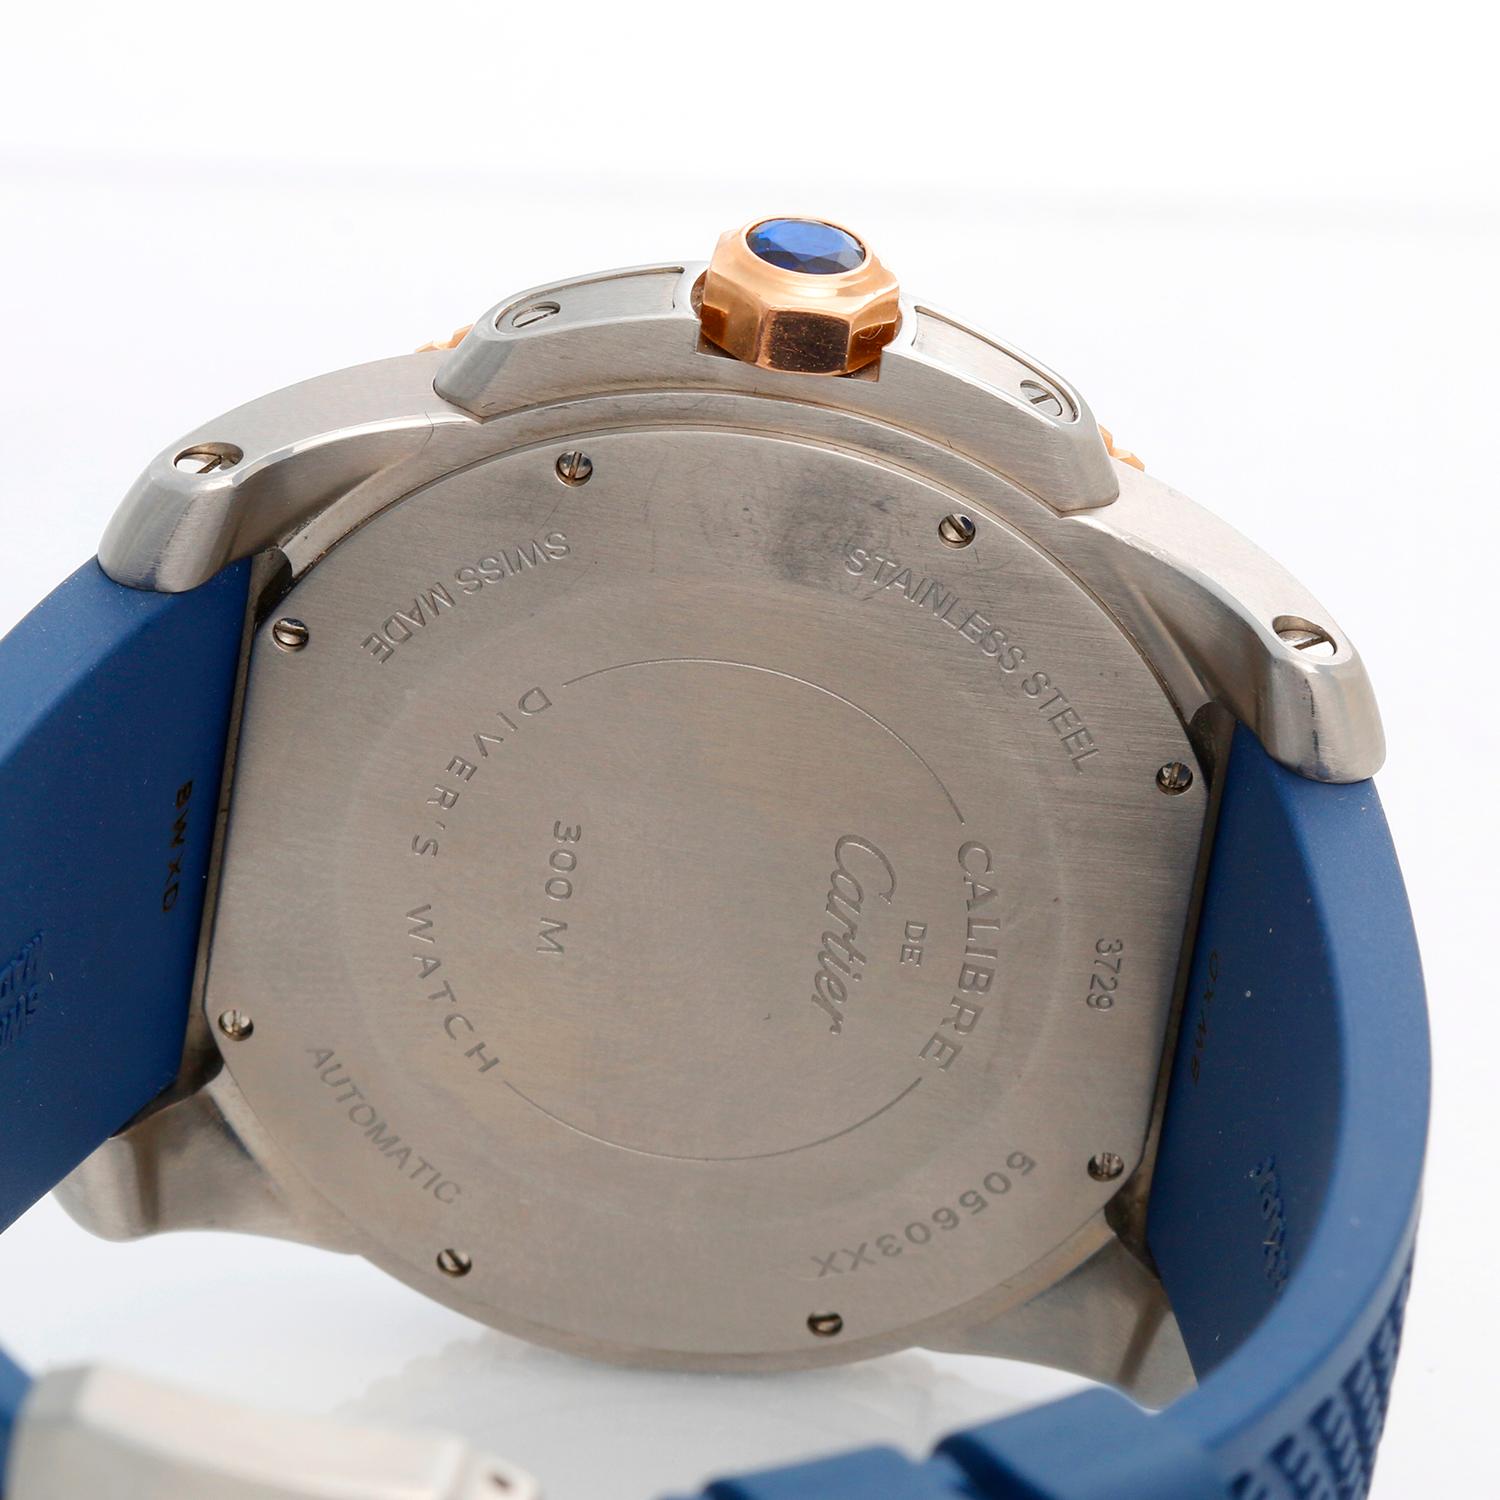 Calibre de Cartier Diver Men's Large 18 Karat Rose Gold and Steel Watch W2CA0009 1